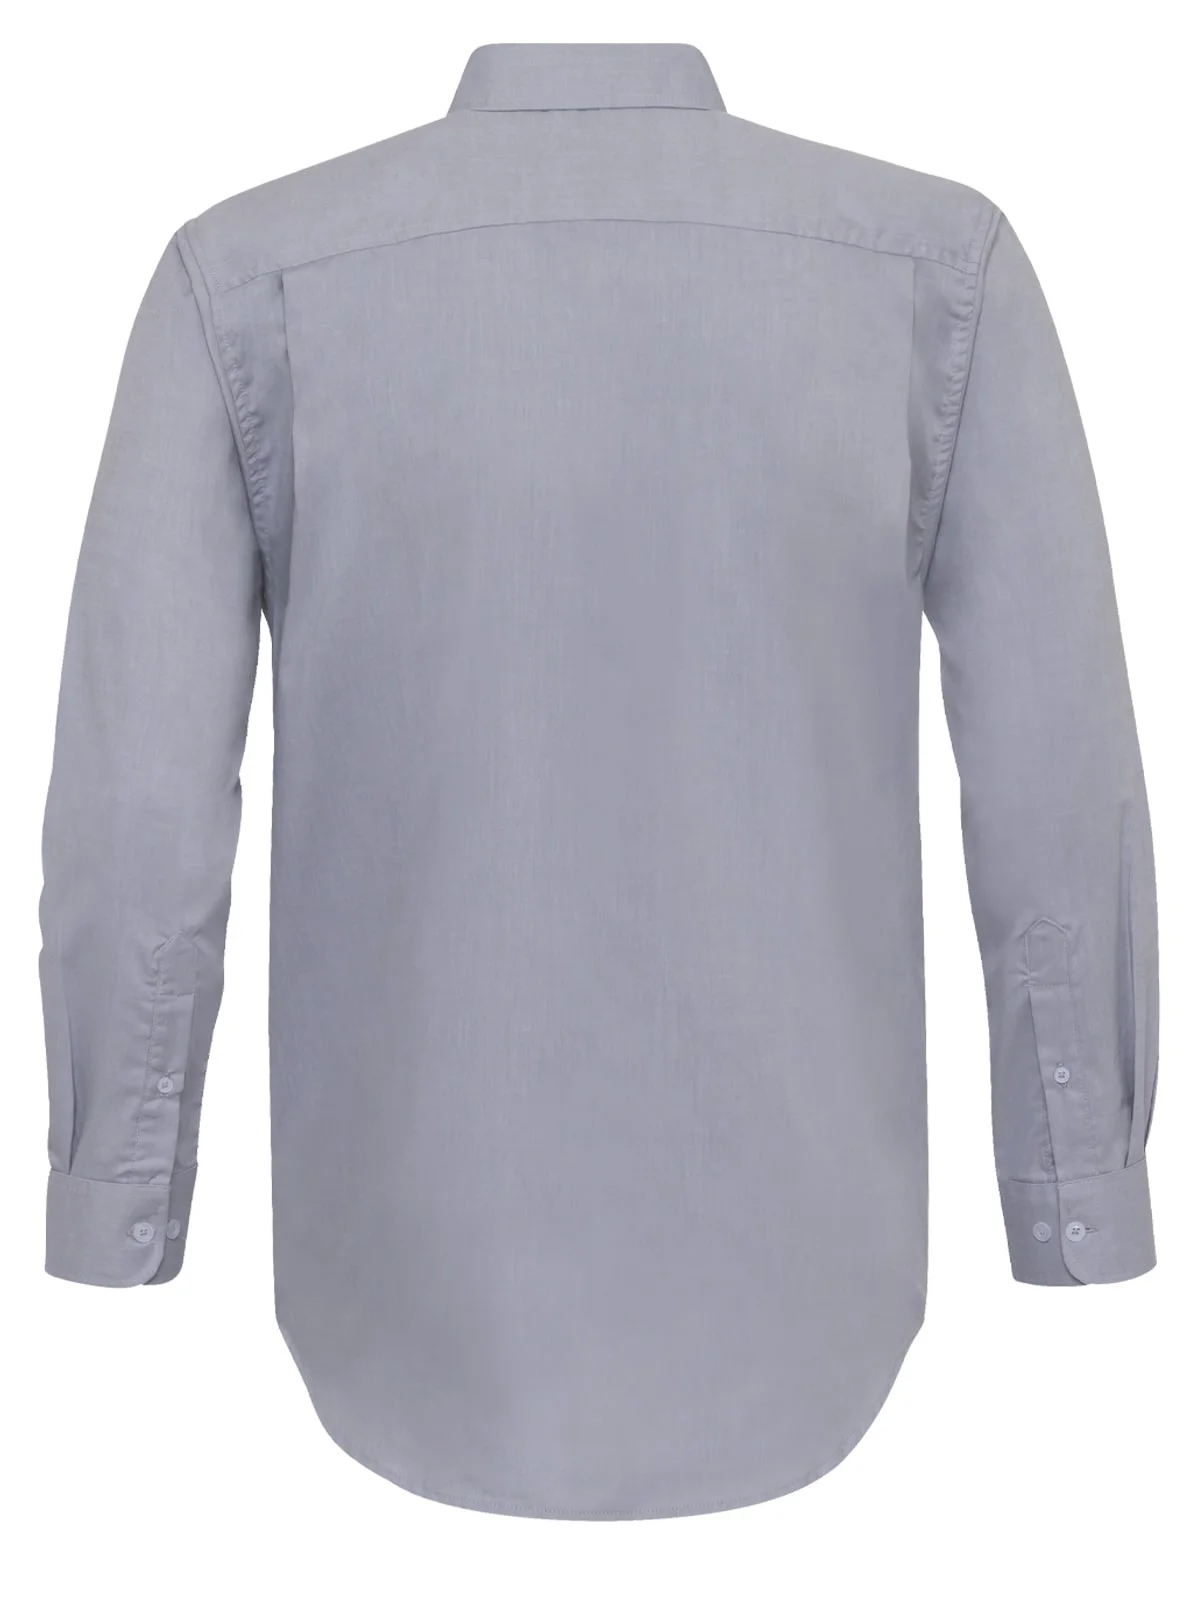 gray oxford shirts